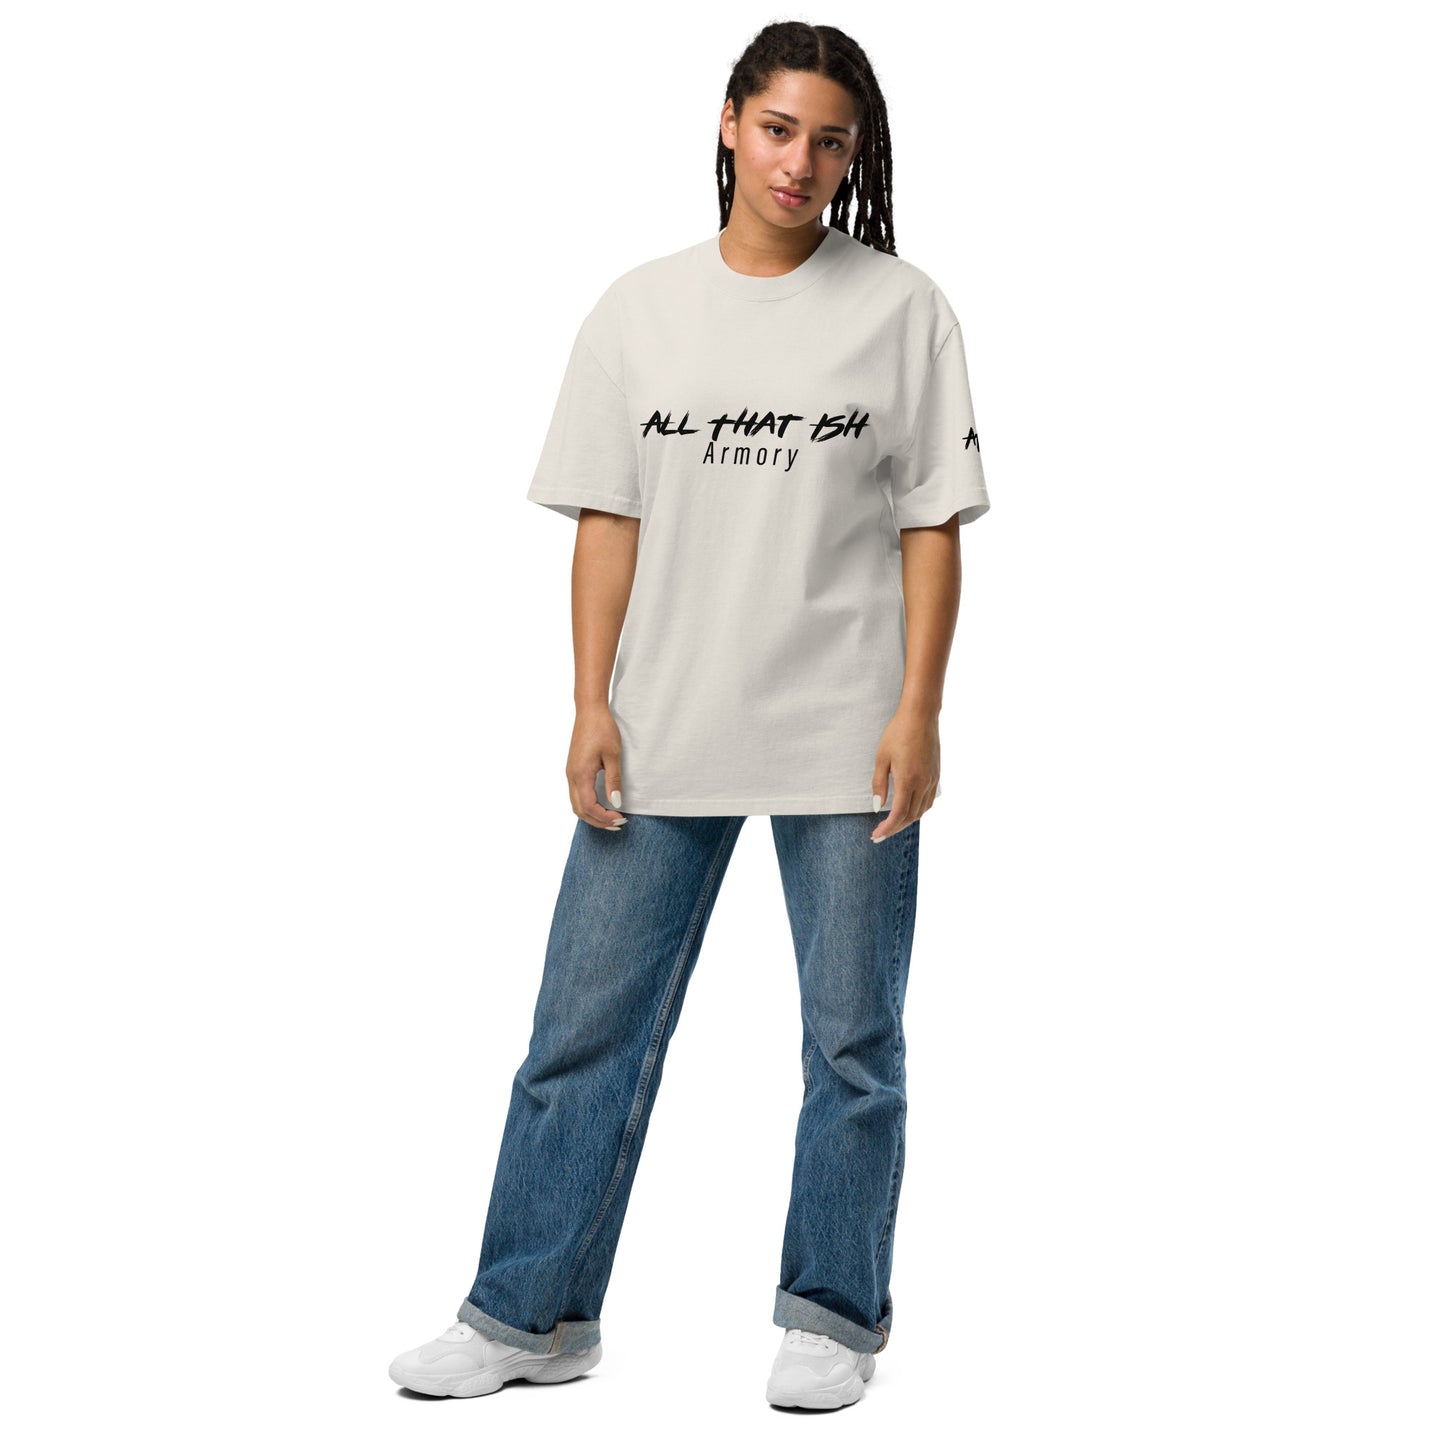 ATI Armory--Oversized faded t-shirt